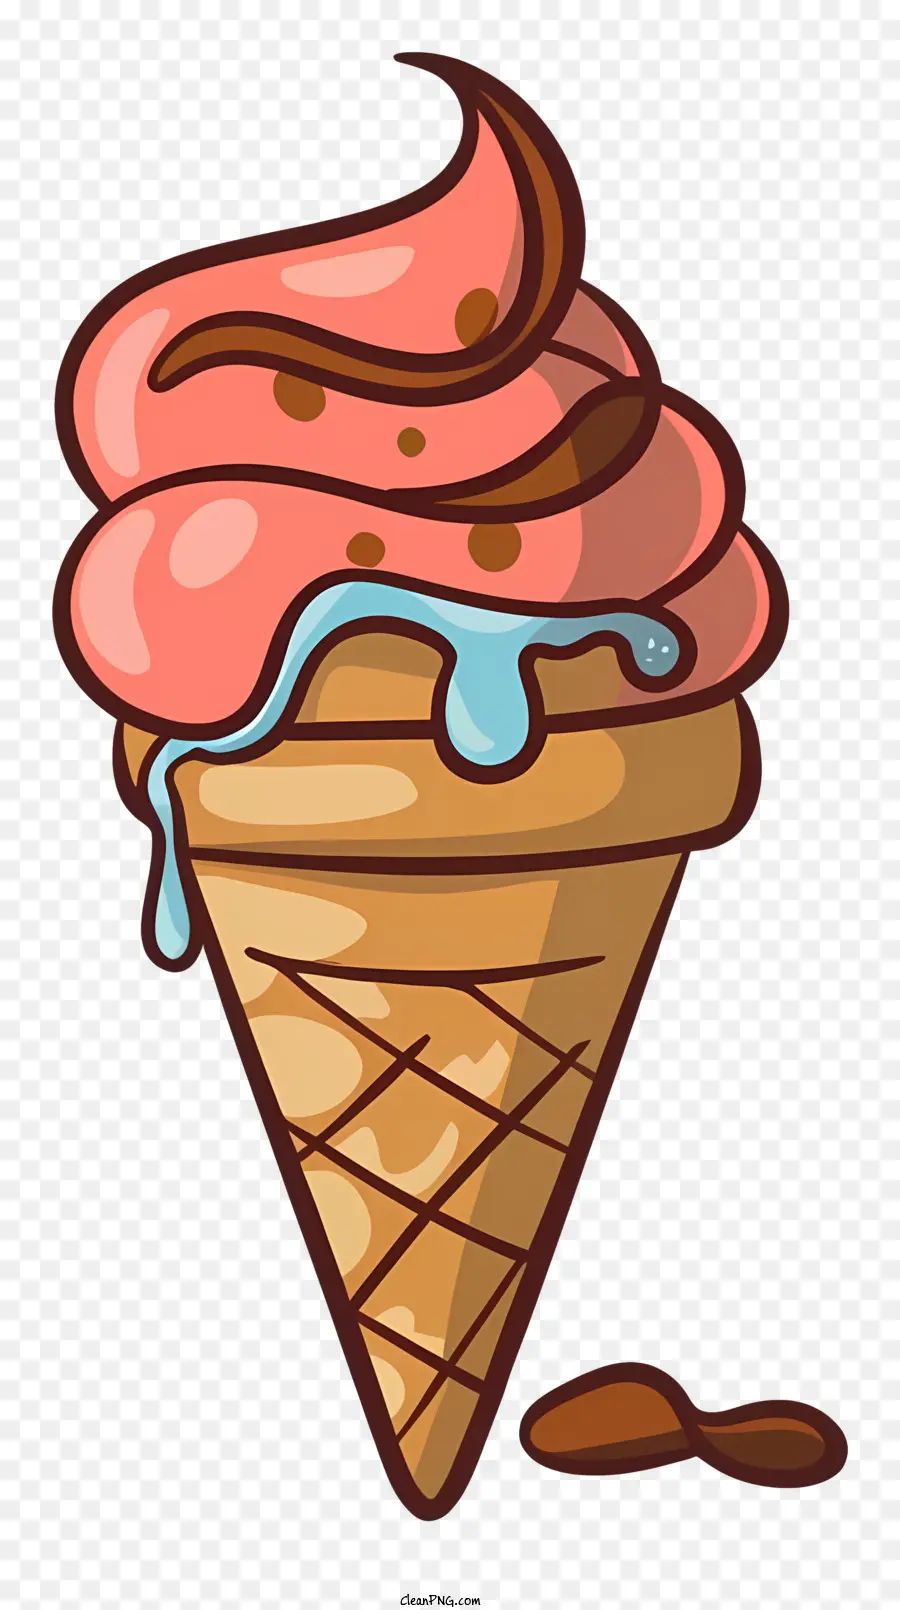 pink ice cream cone chocolate and cream ice cream dripping ice cream ice cream topping sweet treats